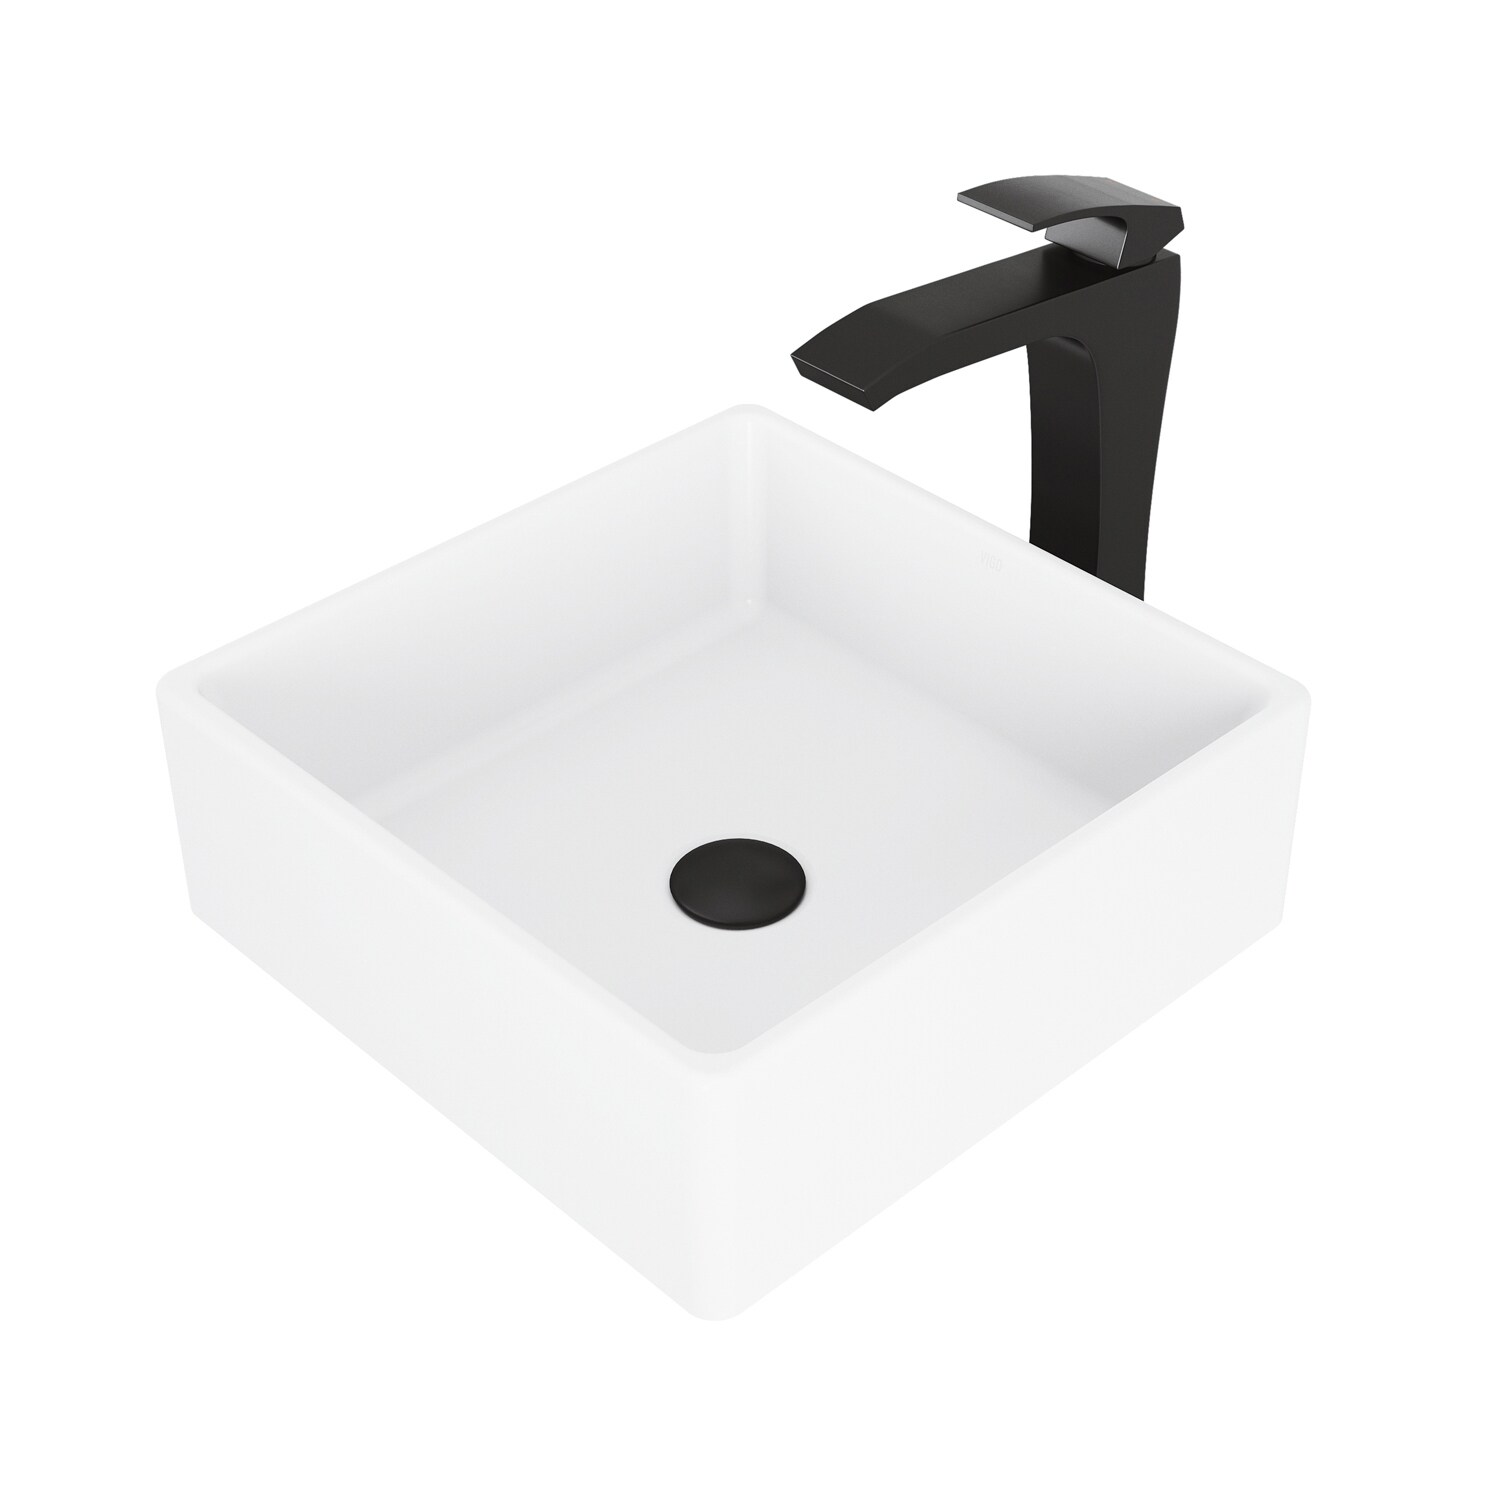 Vessel Square Bathroom Sinks at Lowes.com